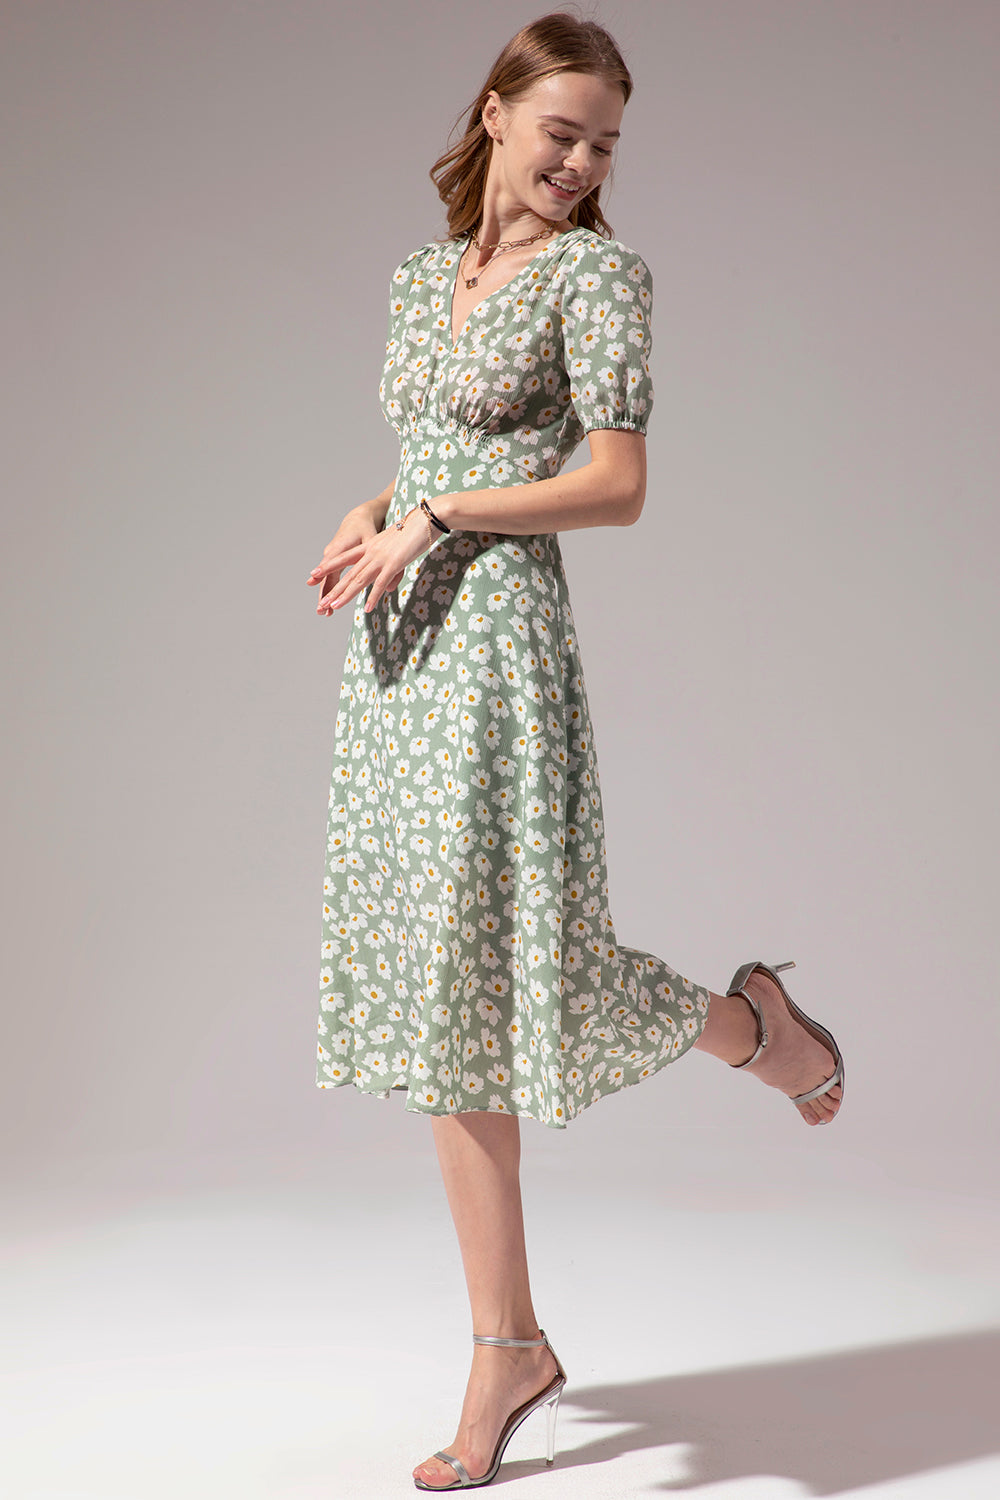 1950s Polka Dots Ivory Dress